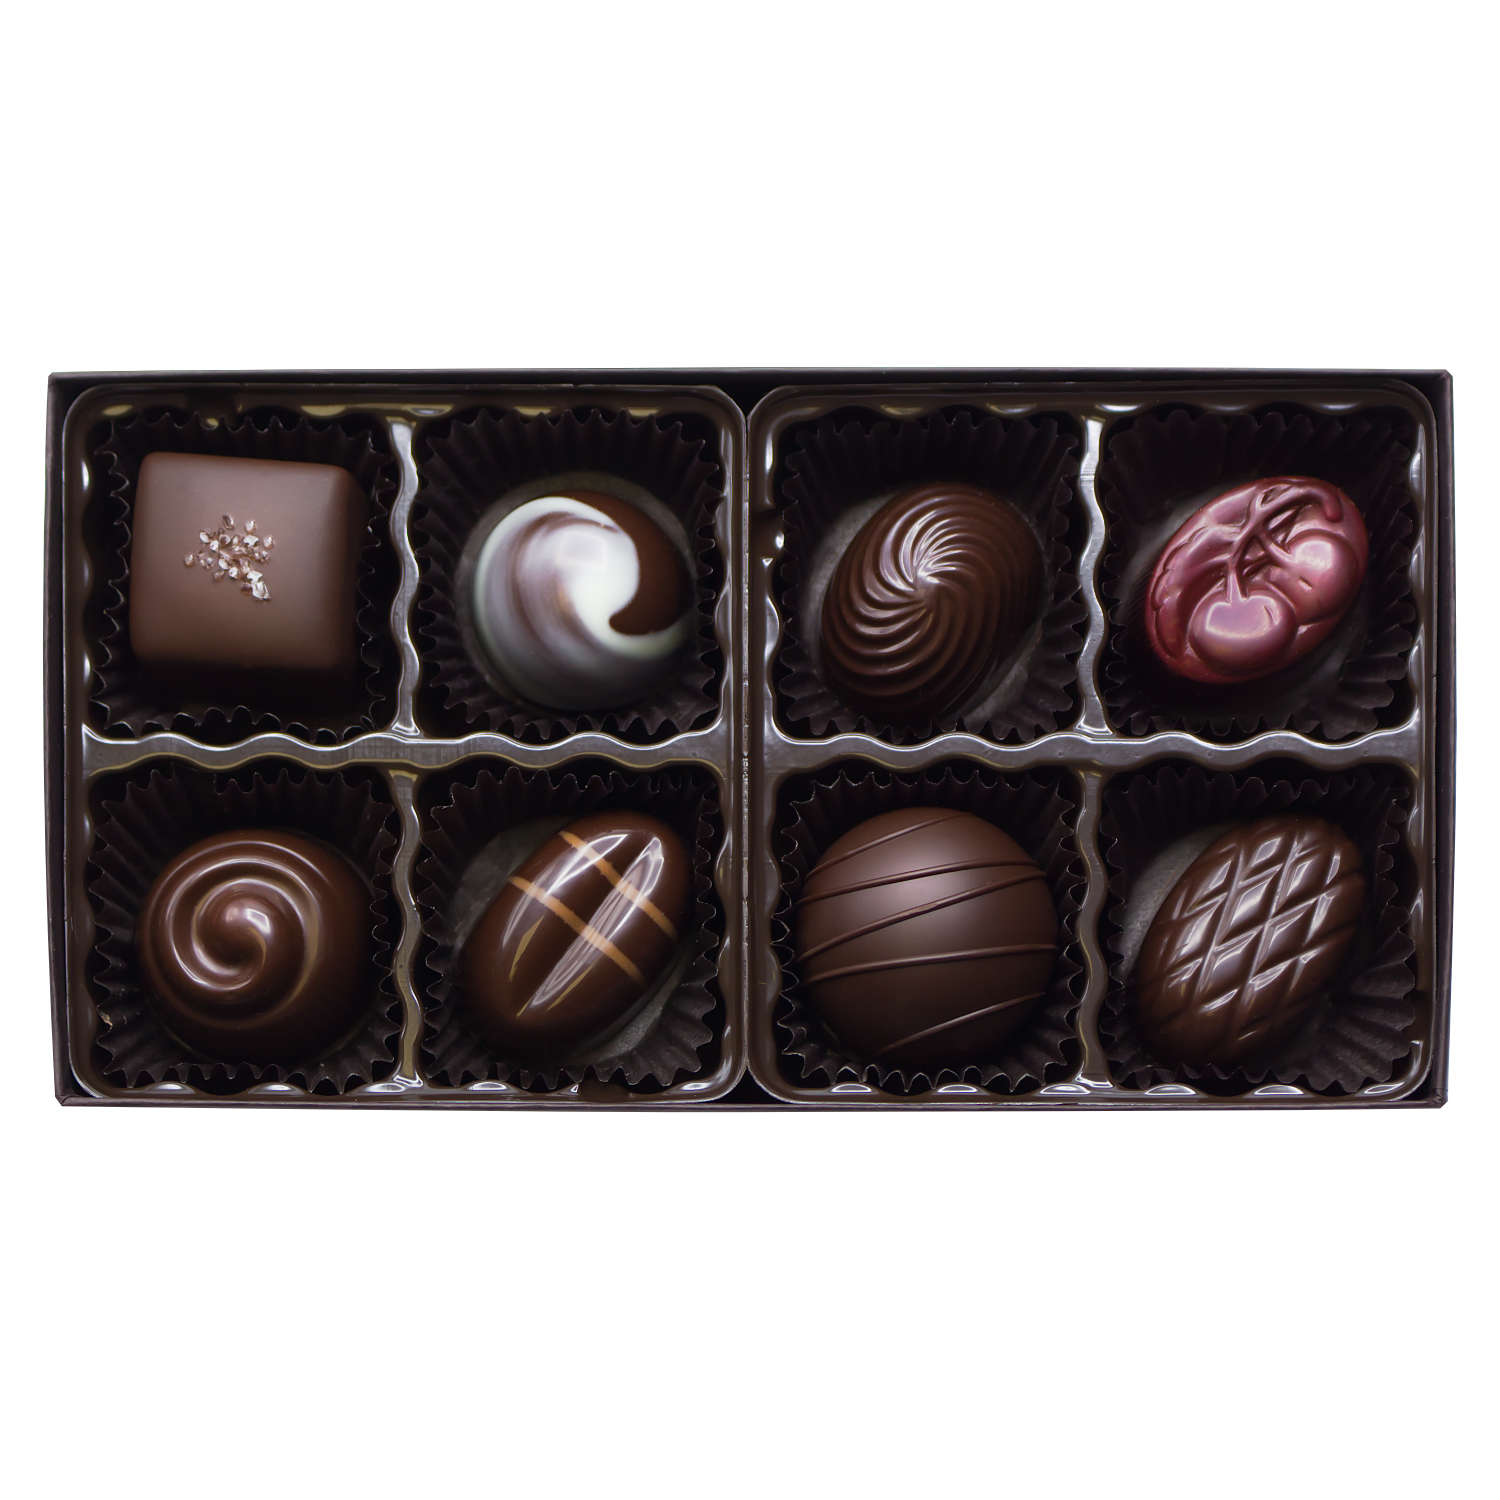 Dark Chocolate Collection